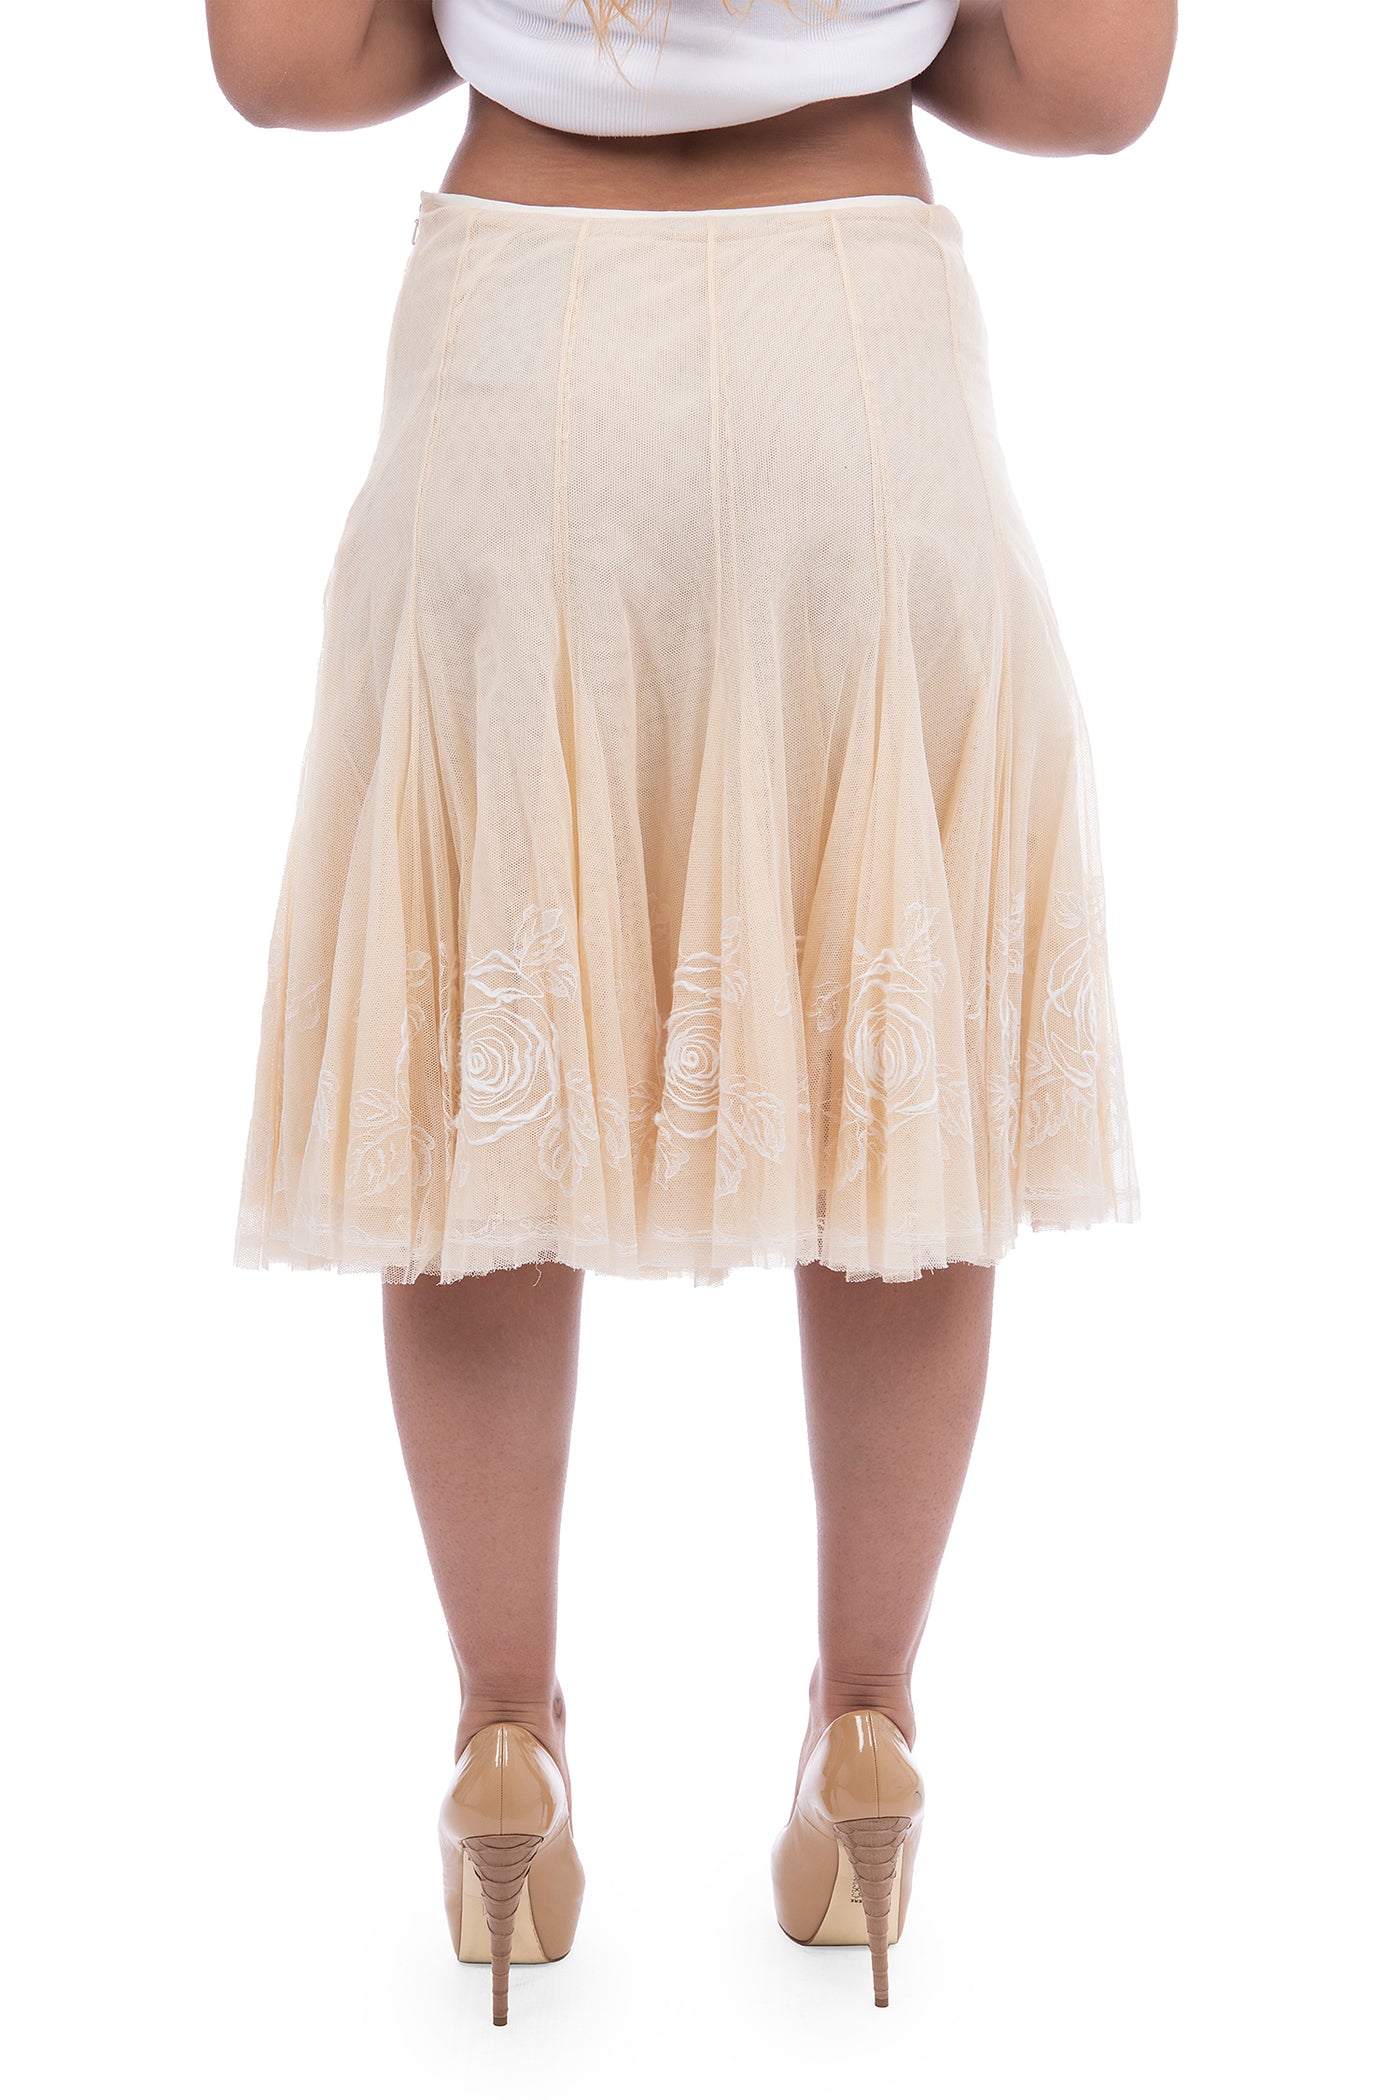 Ralph Lauren, beige embroidered tulle skirt, brand new